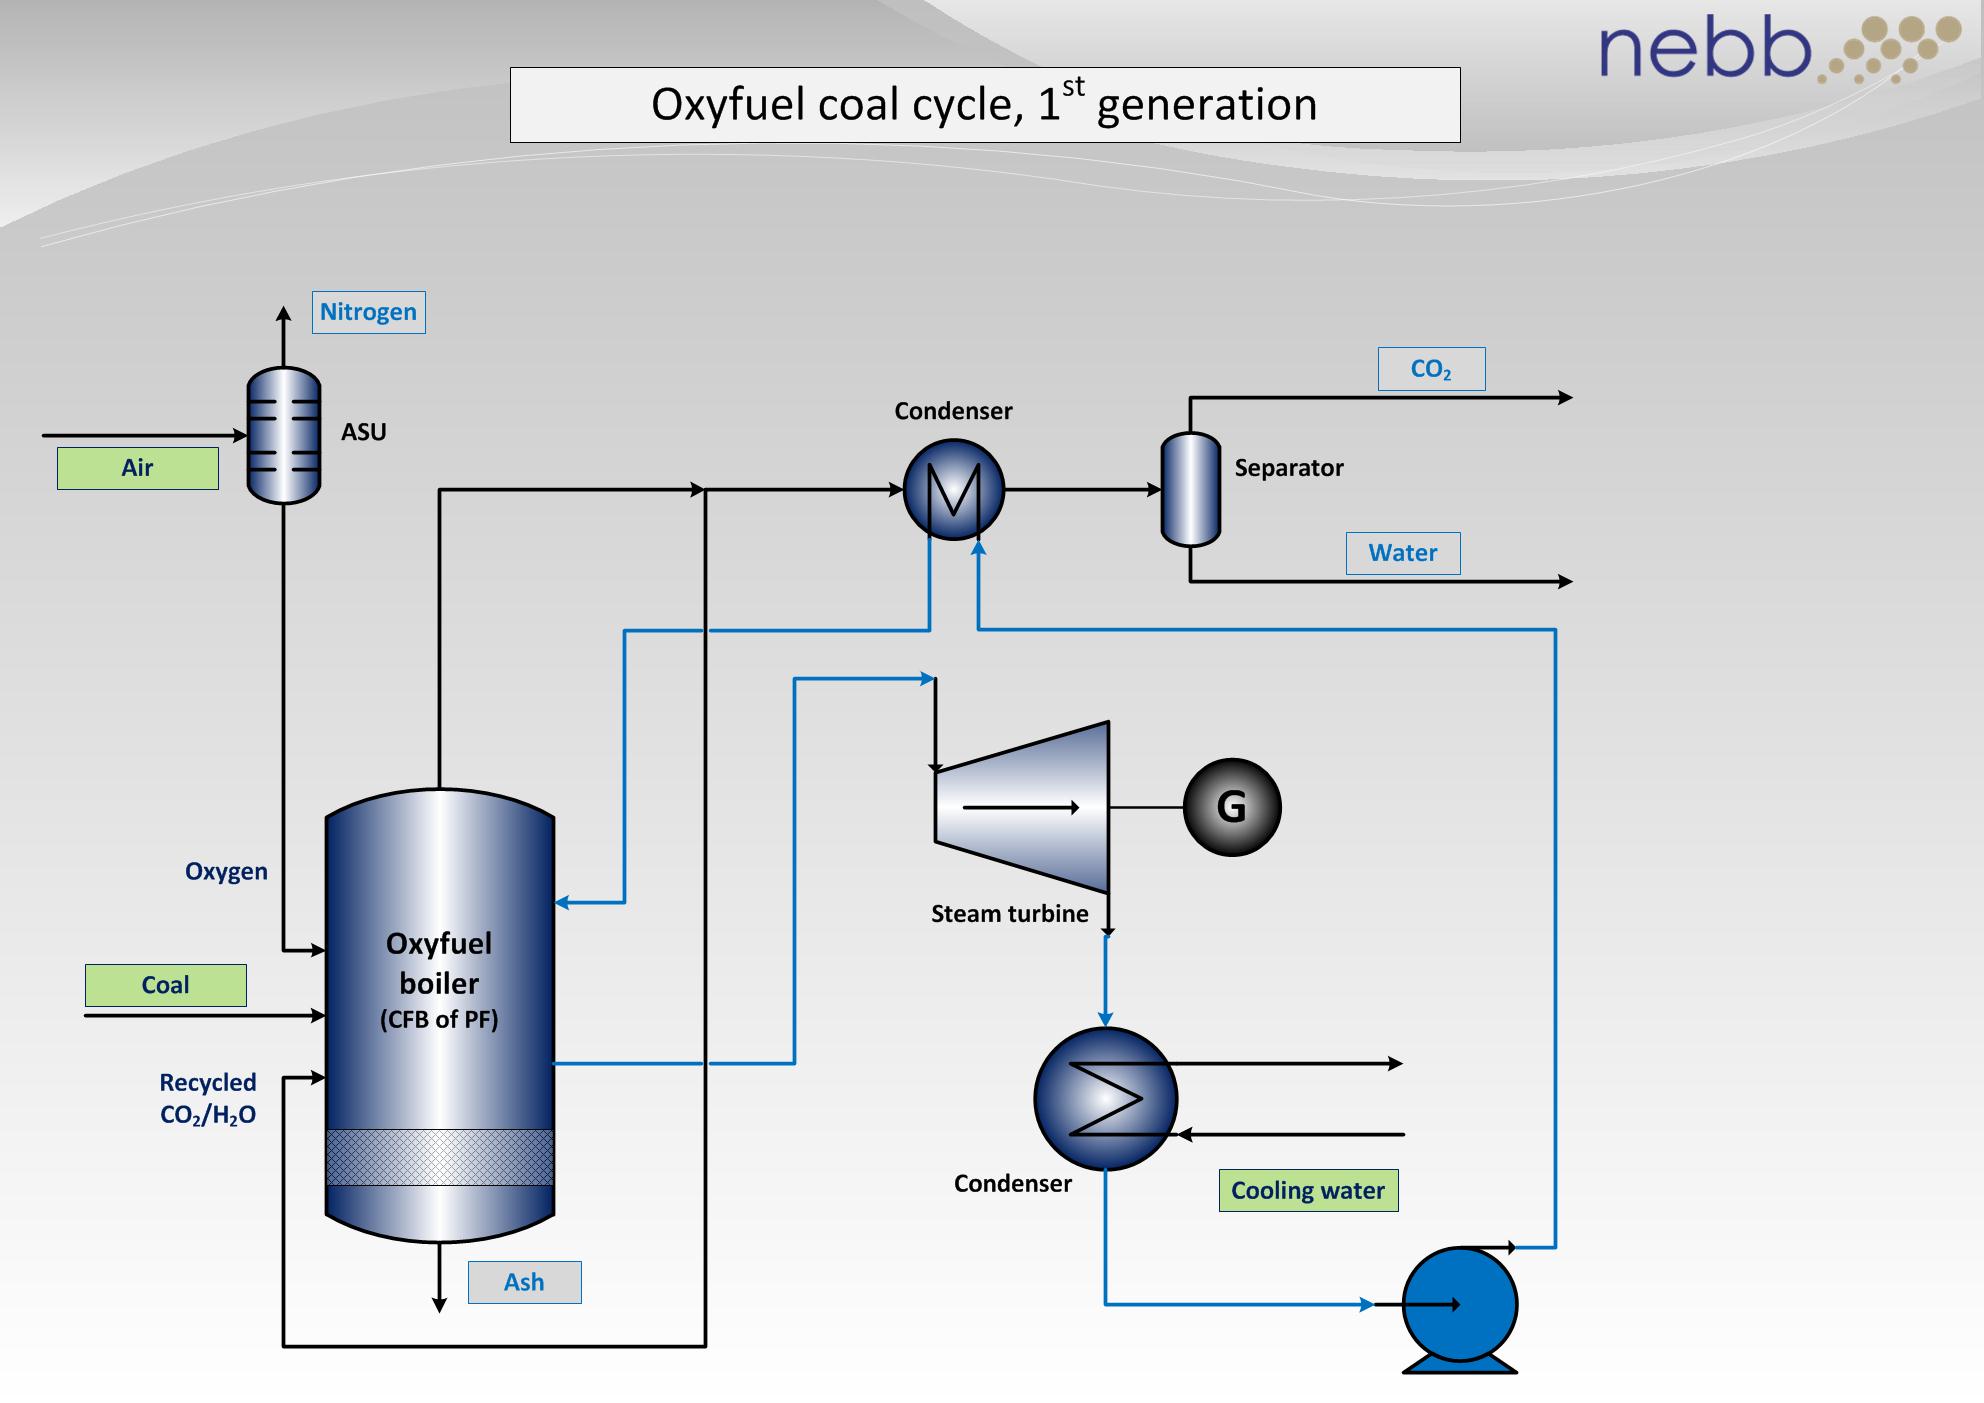 oxyfuel_coal_1st_generation